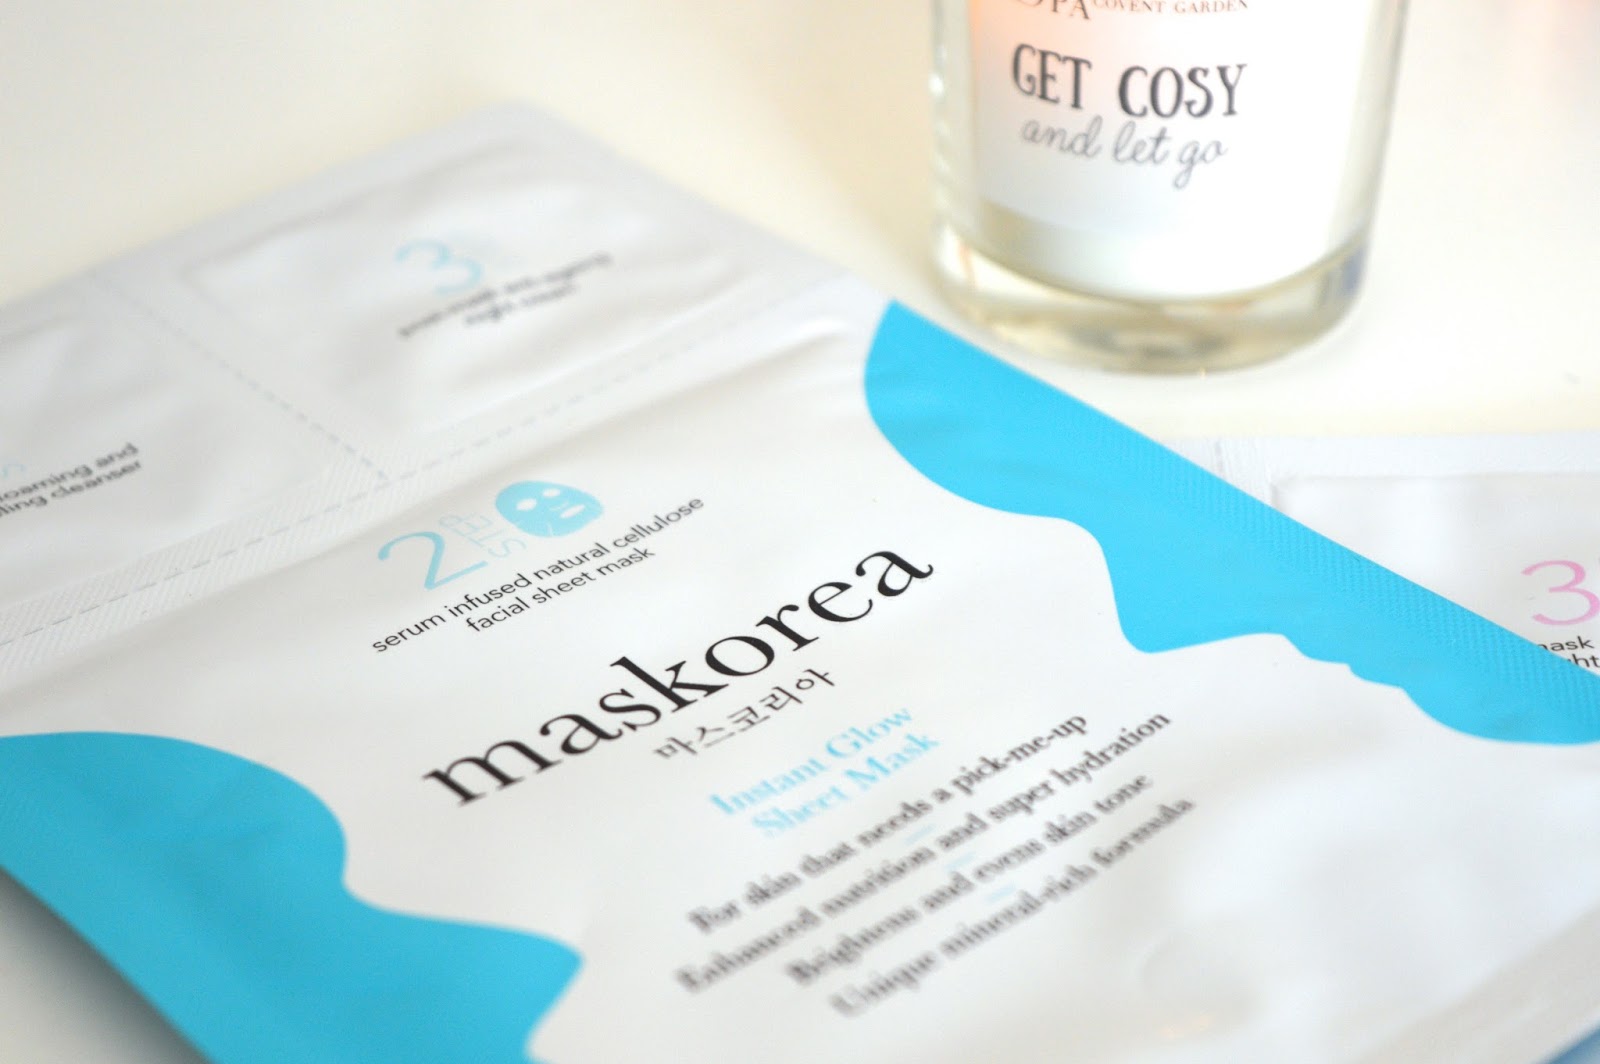 Maskorea Instant Glow Mask Review, Maskorea sheet mask review, beauty bloggers UK, UK beauty blog